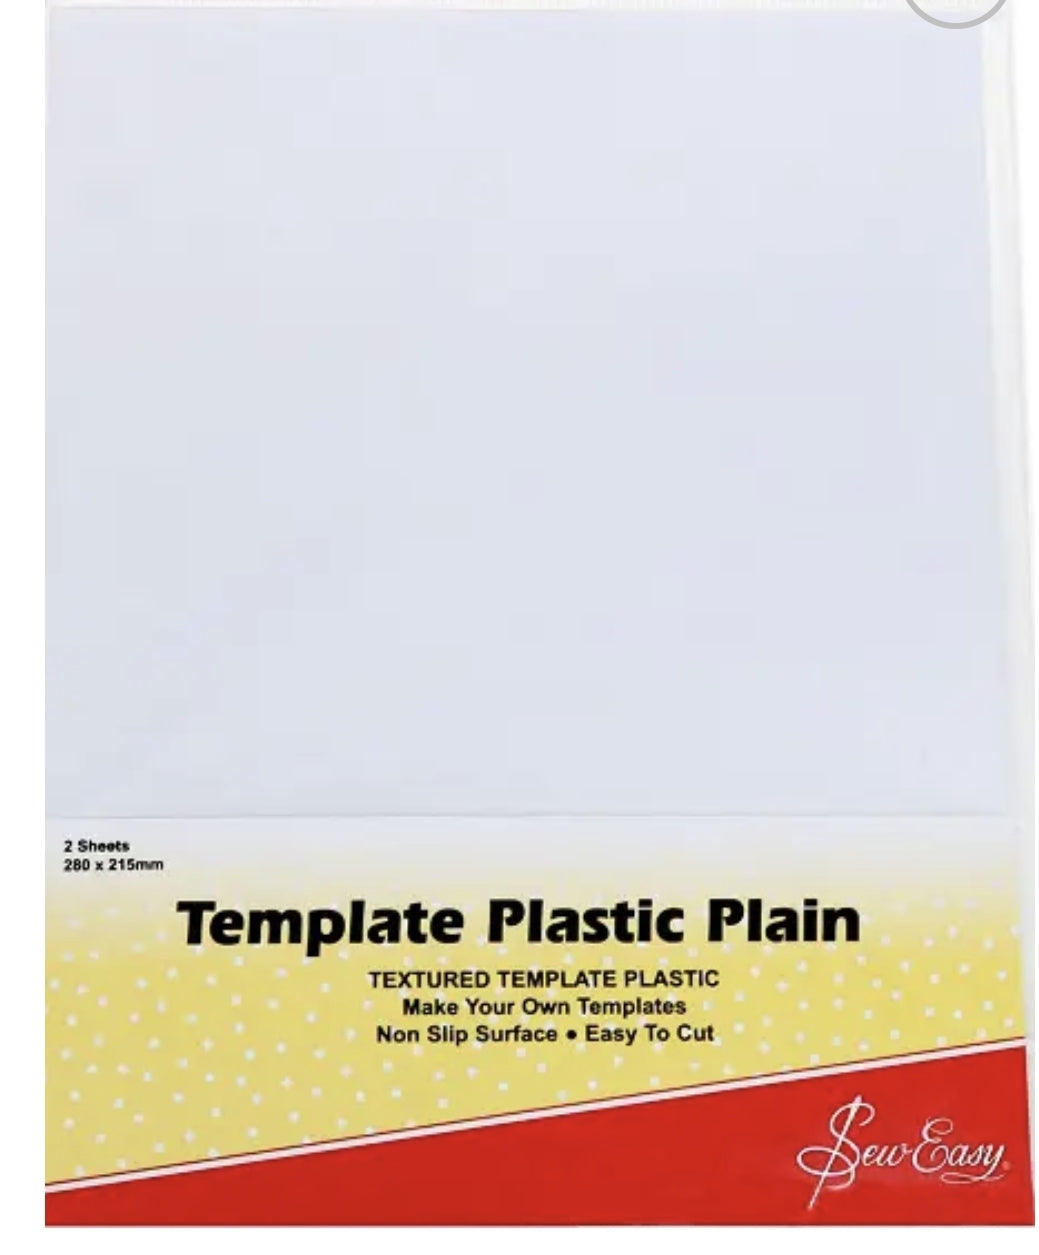 Template Plastic Plain